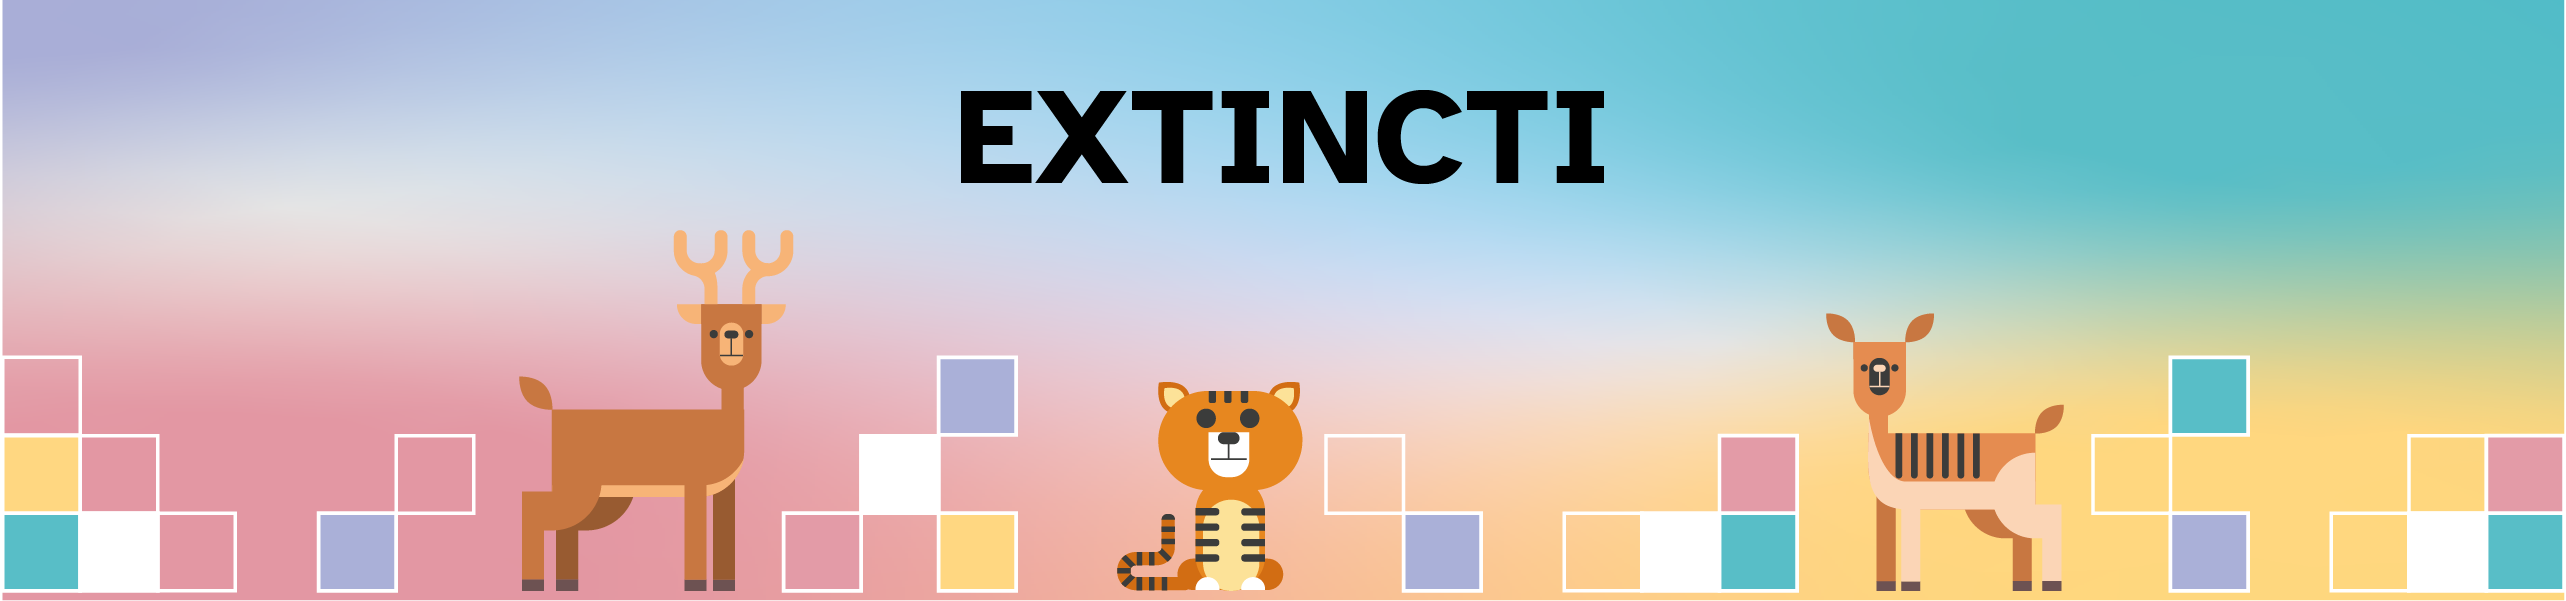 Extincti banner